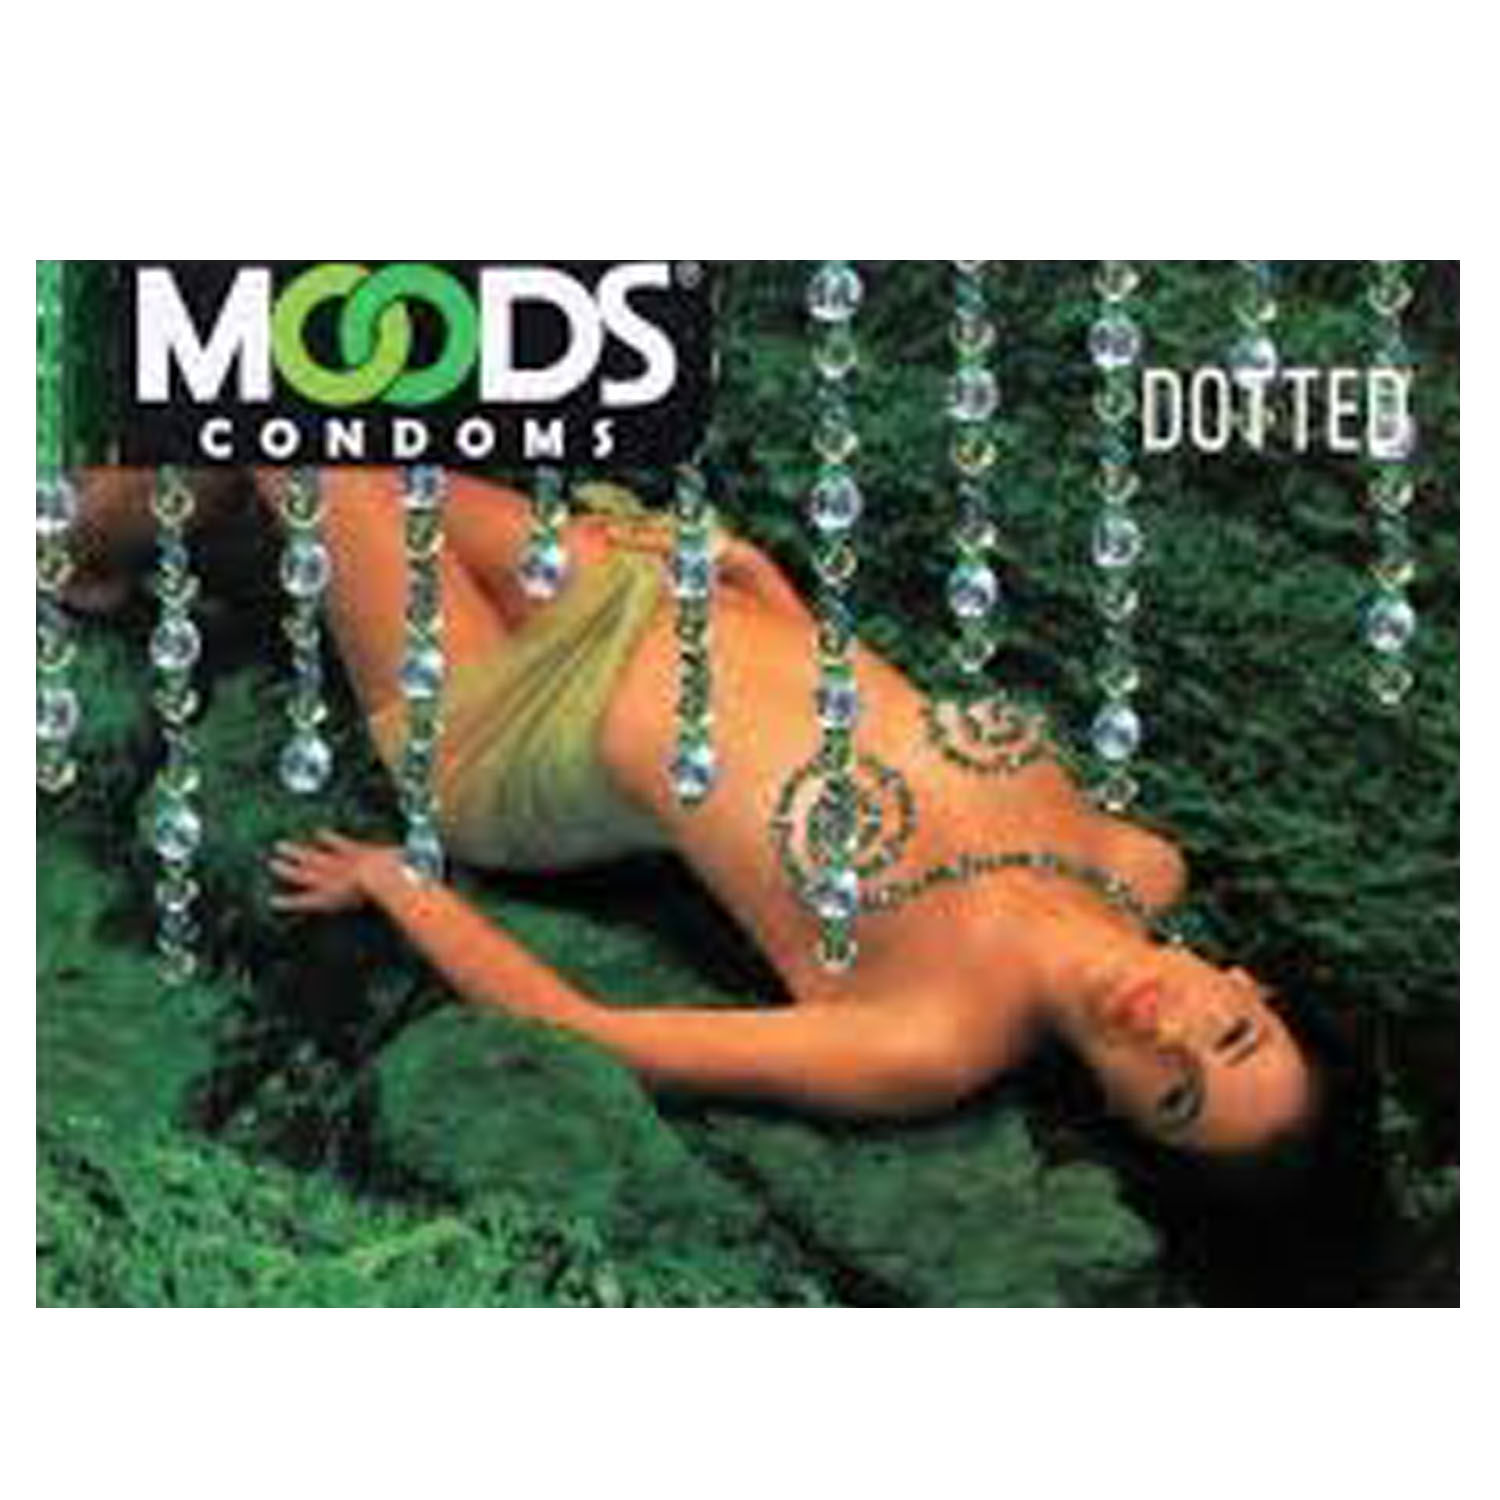 Buy Moods Dotted Condoms, 10 Count Online